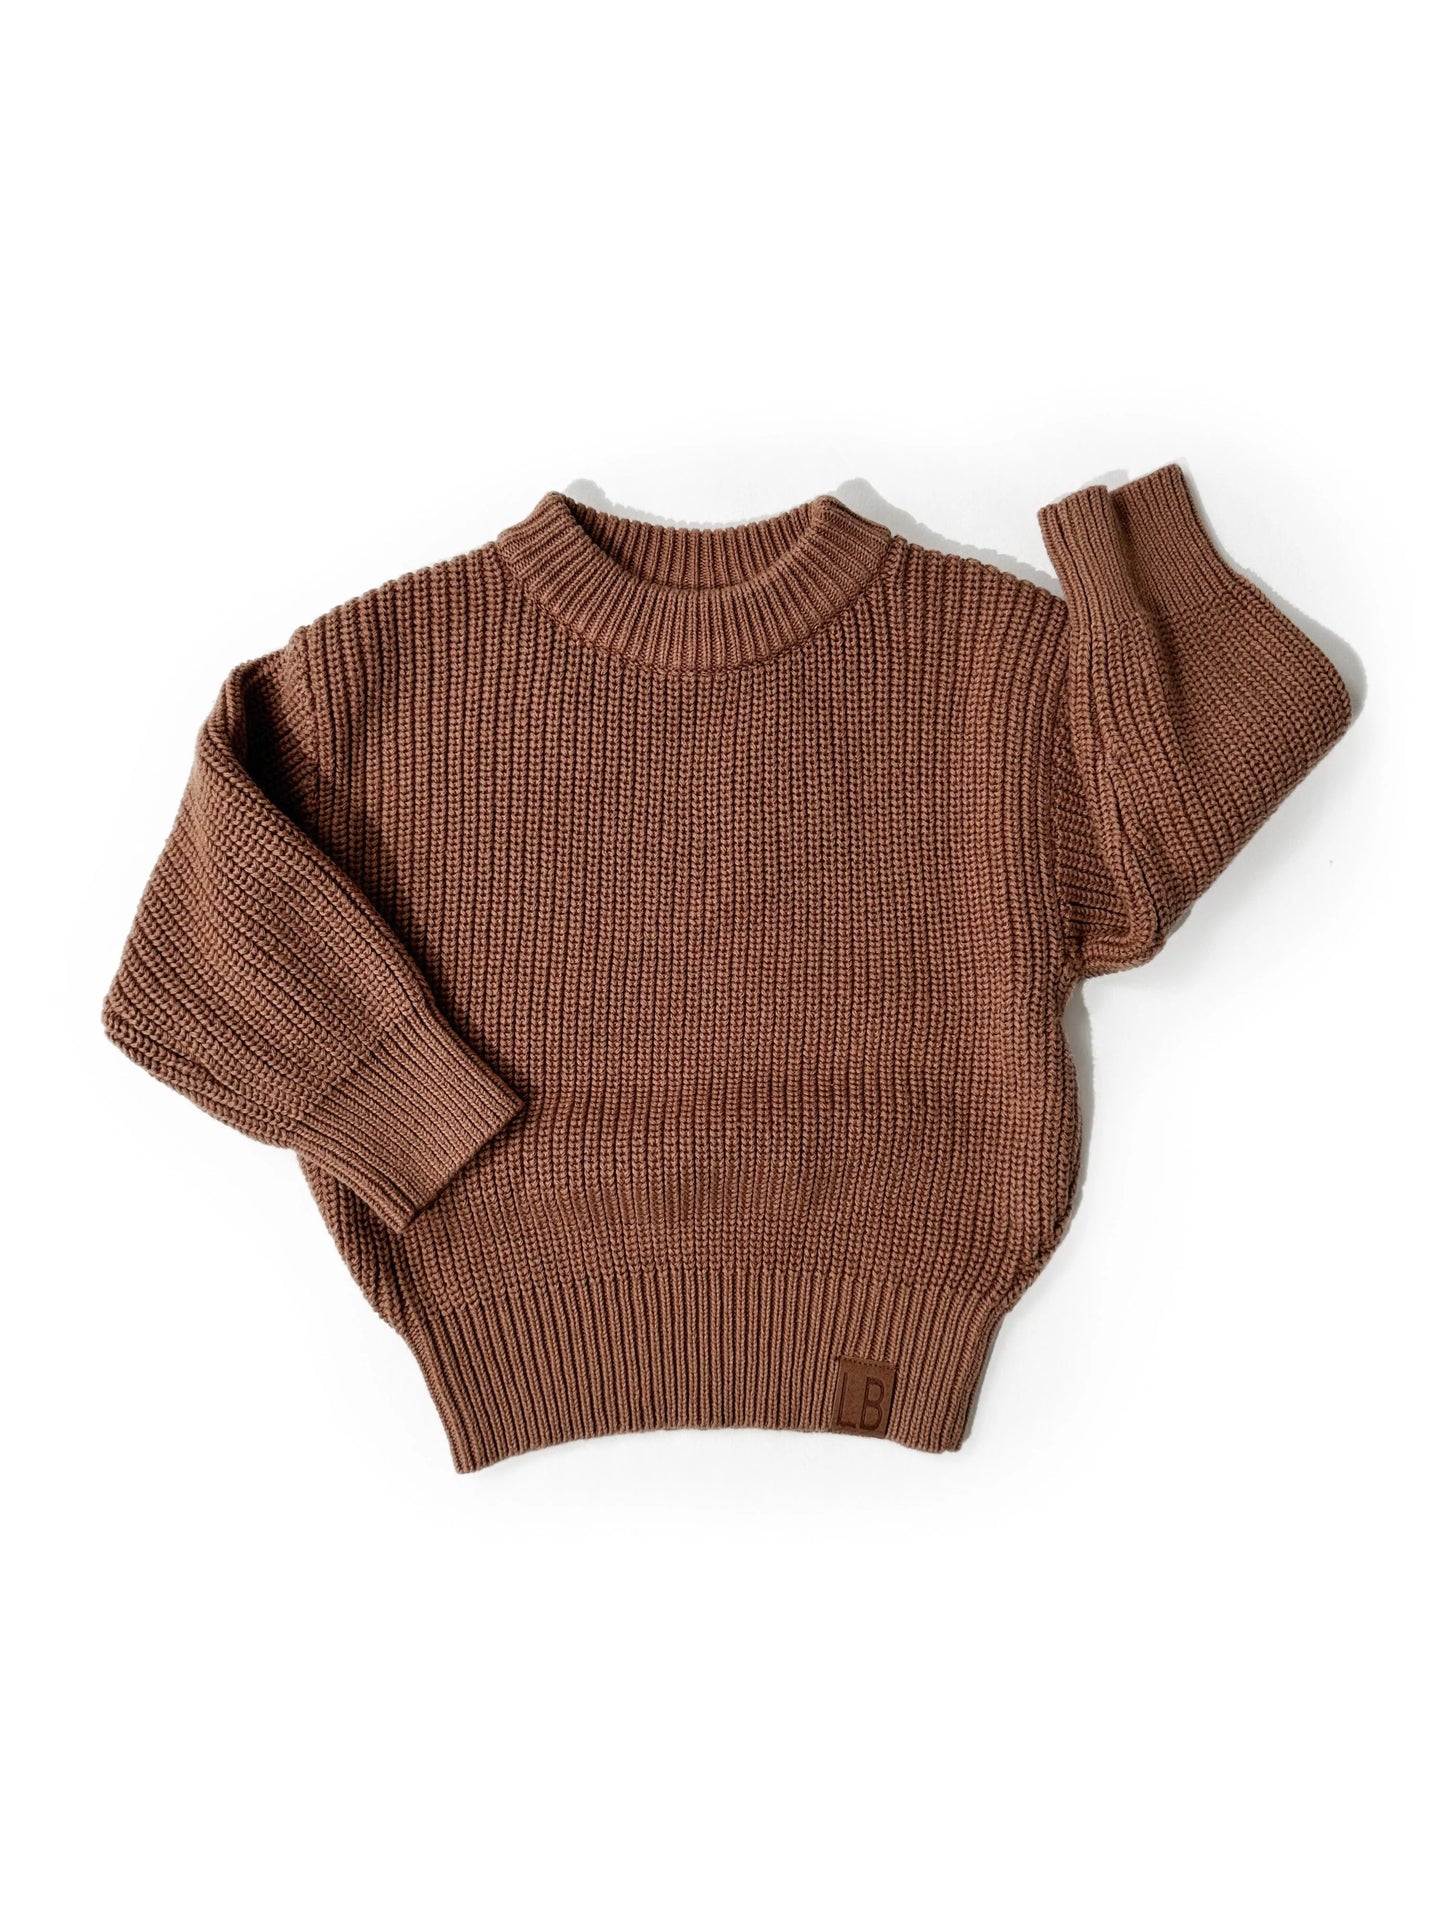 Little Bipsy Chunky Knit Sweater - Nutmeg